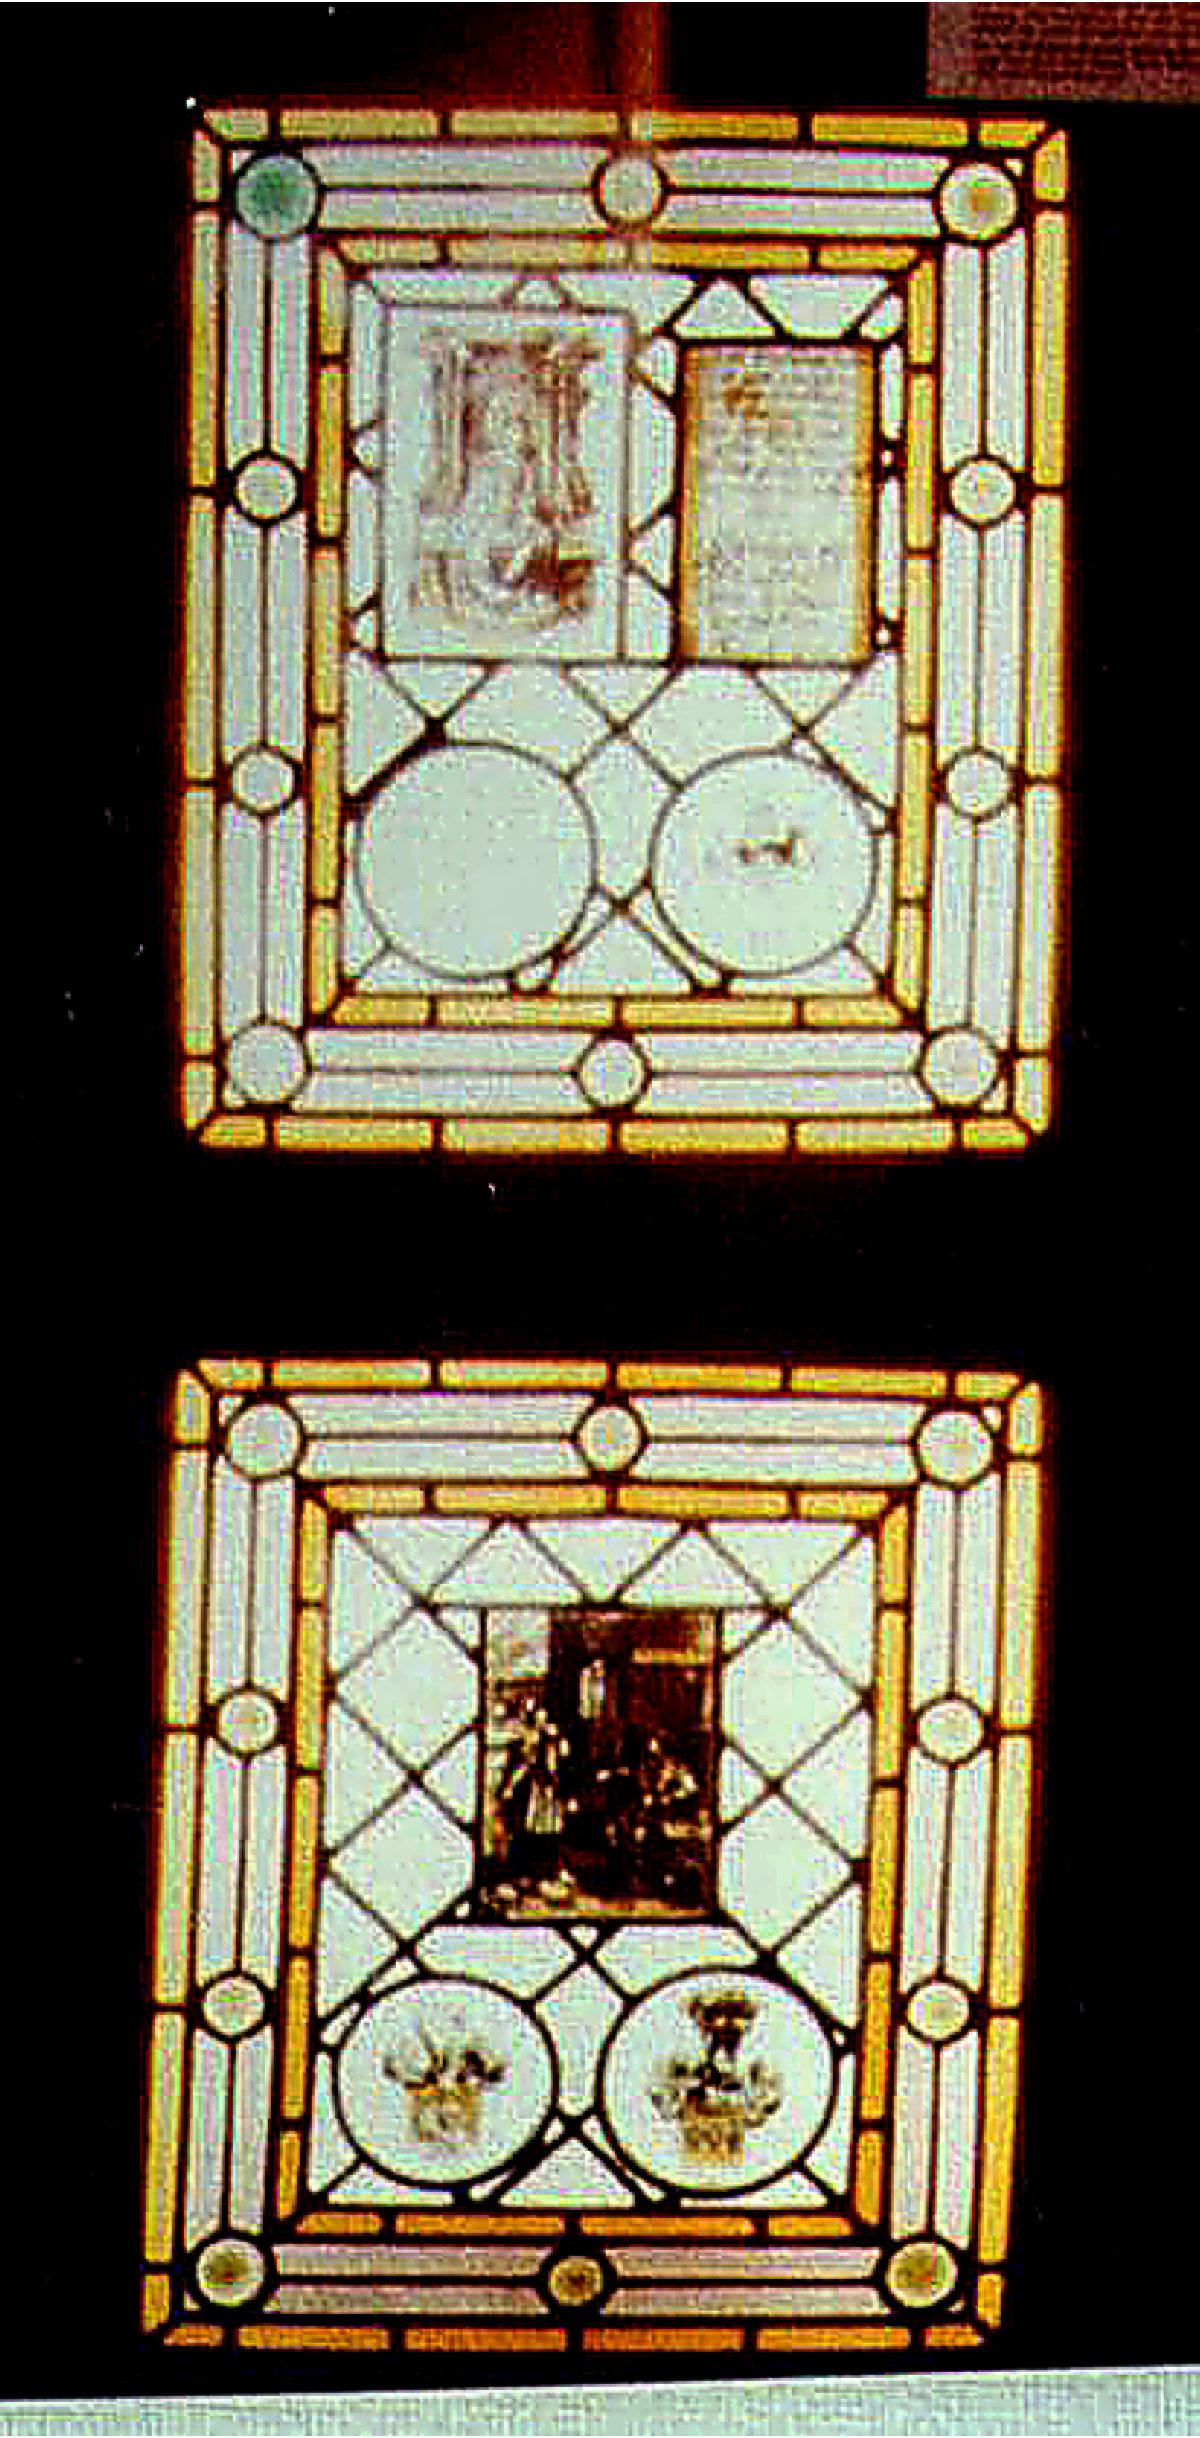 Overleve evaluerbare undskyld File:Op den Graeff Krefeld Stained-Glass Windows II.jpg - Wikimedia Commons